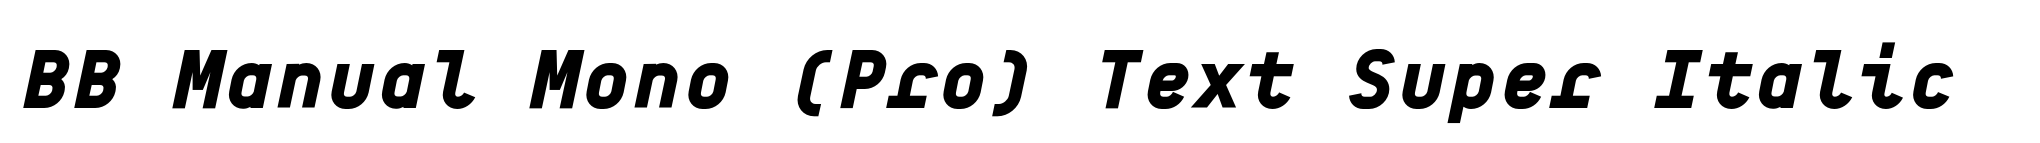 BB Manual Mono (Pro) Text Super Italic image